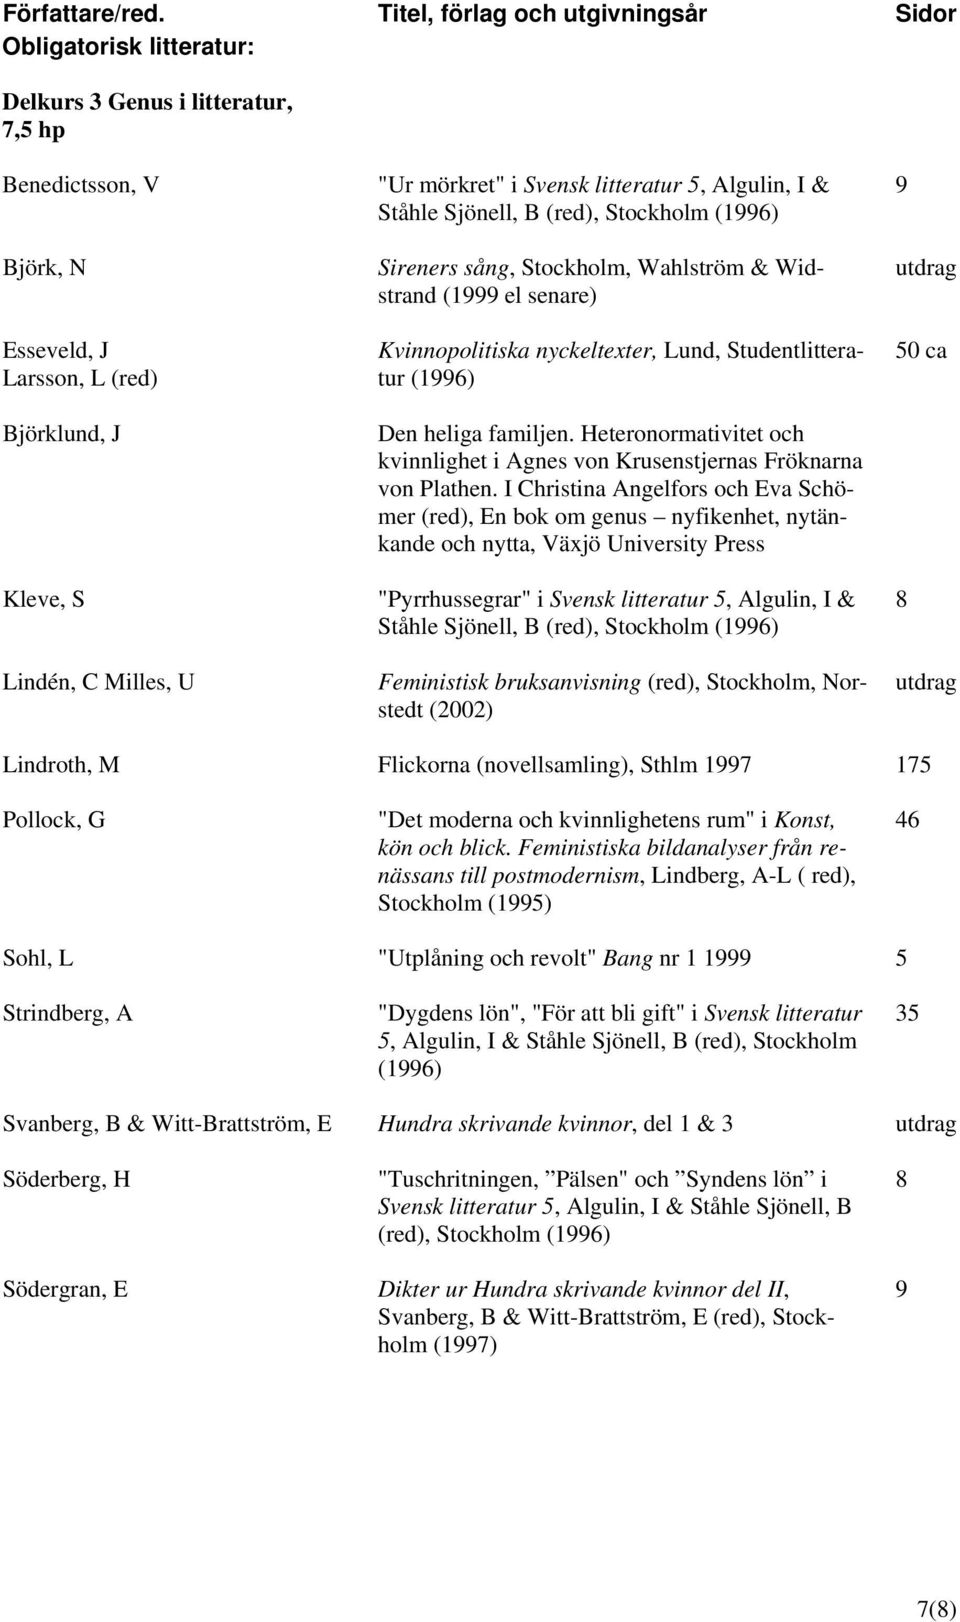 mörkret" i Svensk litteratur 5, Algulin, I & Ståhle Sjönell, B (red), Stockholm (1996) Sireners sång, Stockholm, Wahlström & Widstrand (1999 el senare) Kvinnopolitiska nyckeltexter, Lund,